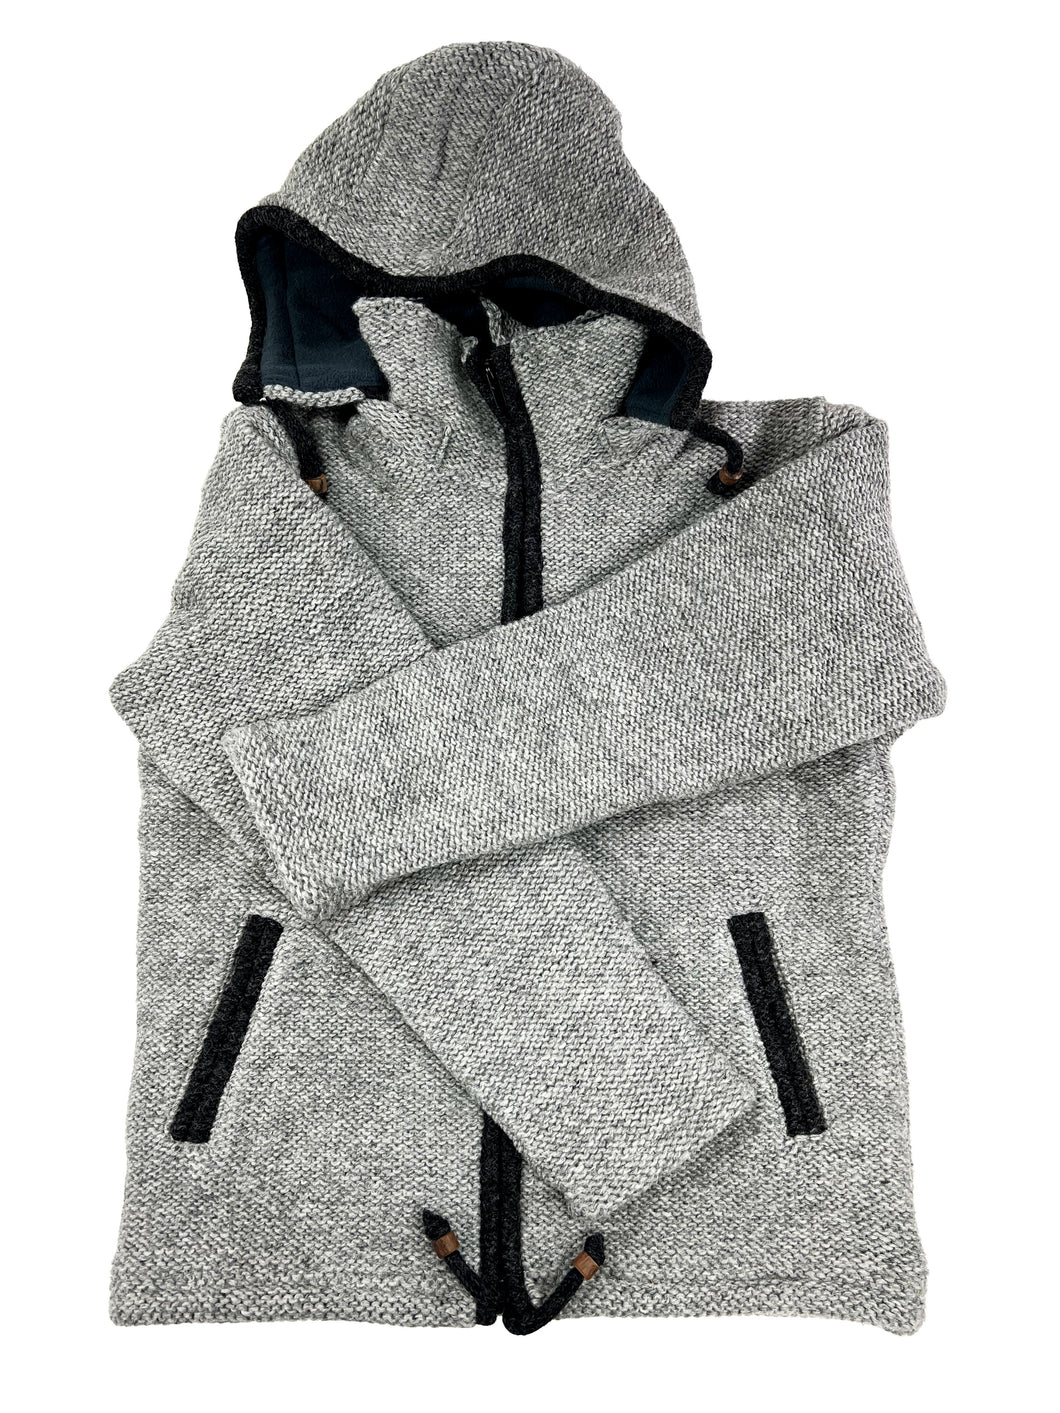 Hand knitted woolen jacket/sweater with soft inner fleece